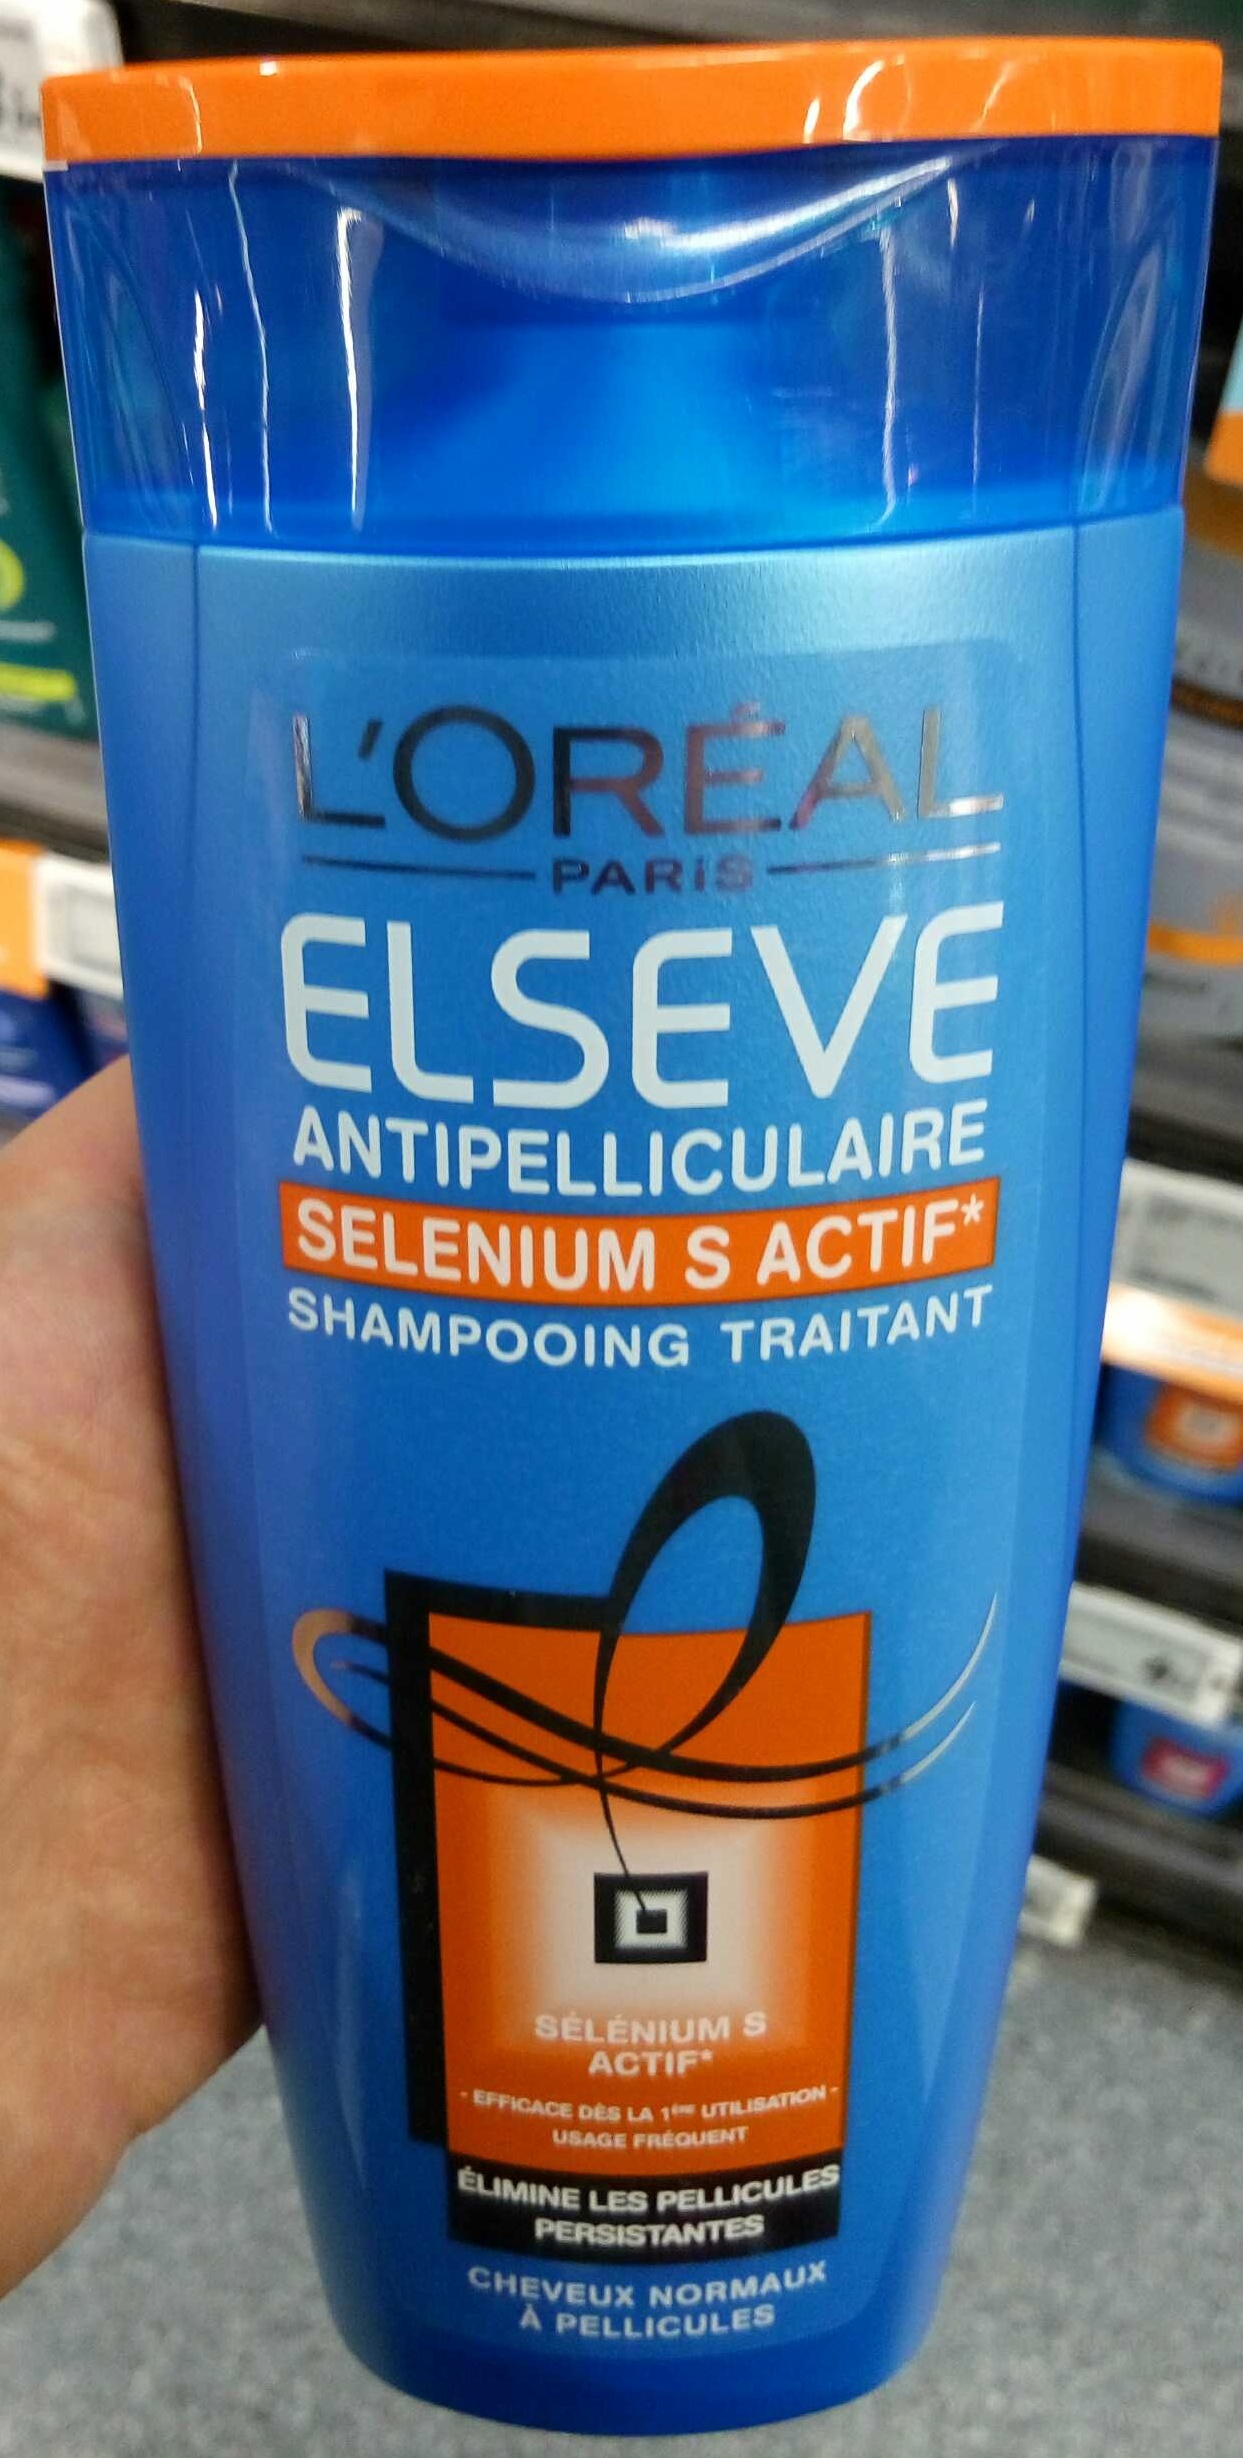 Elseve Antipelliculaire Selenium S actif shampooing traitant - Produto - fr